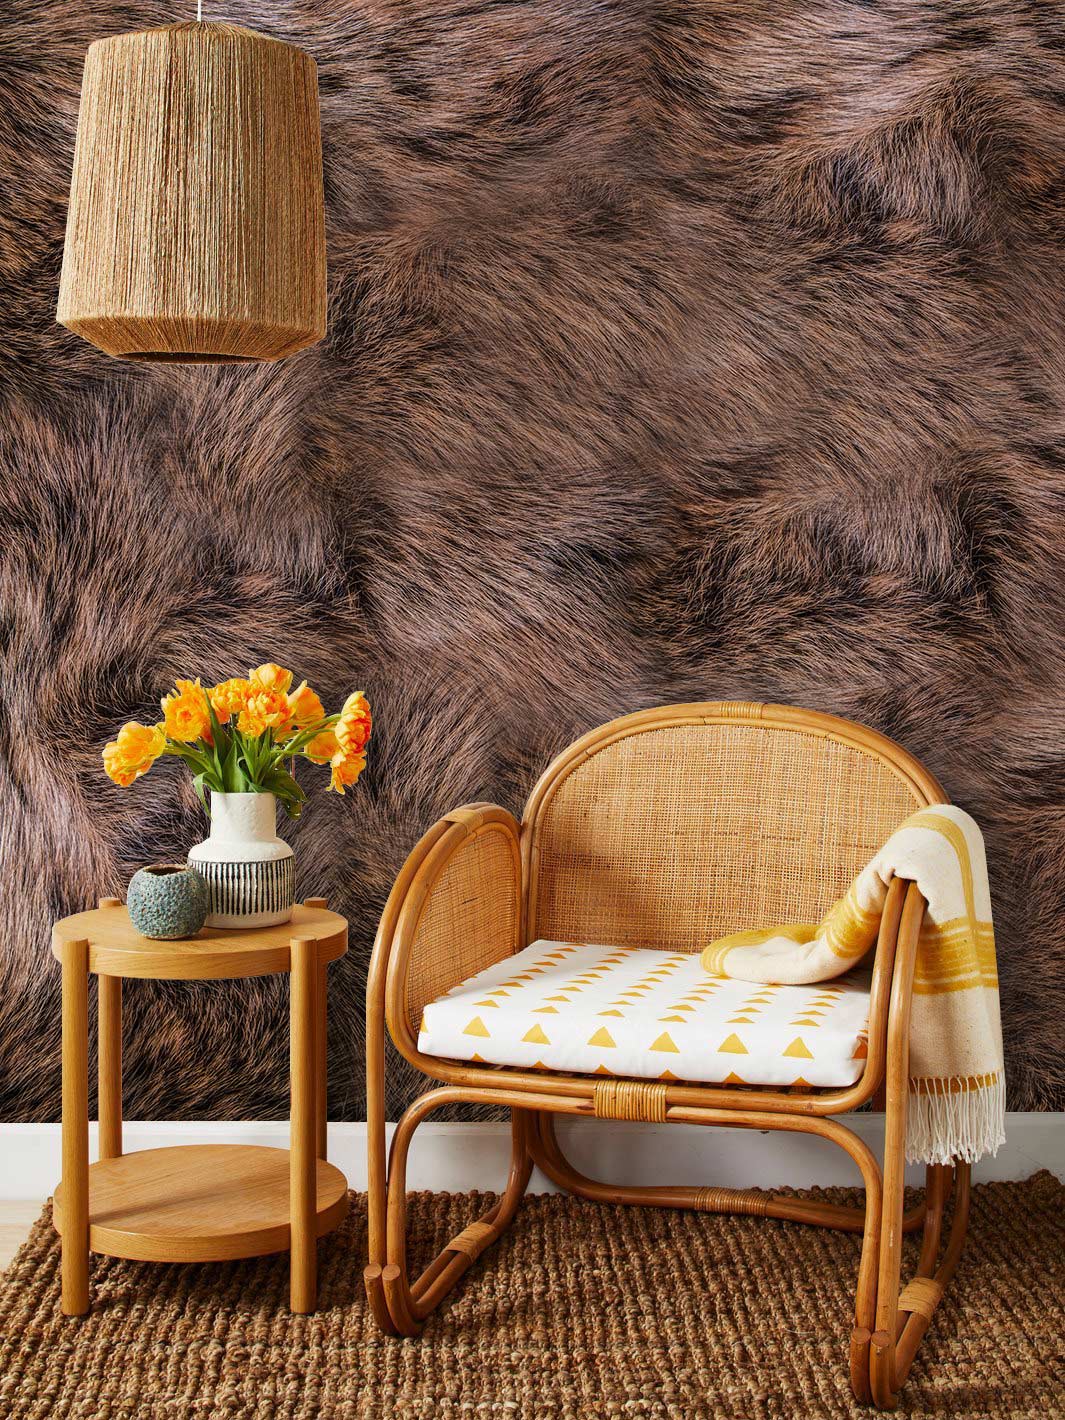 Wallpaper mural in the interior design of brown fur animals.